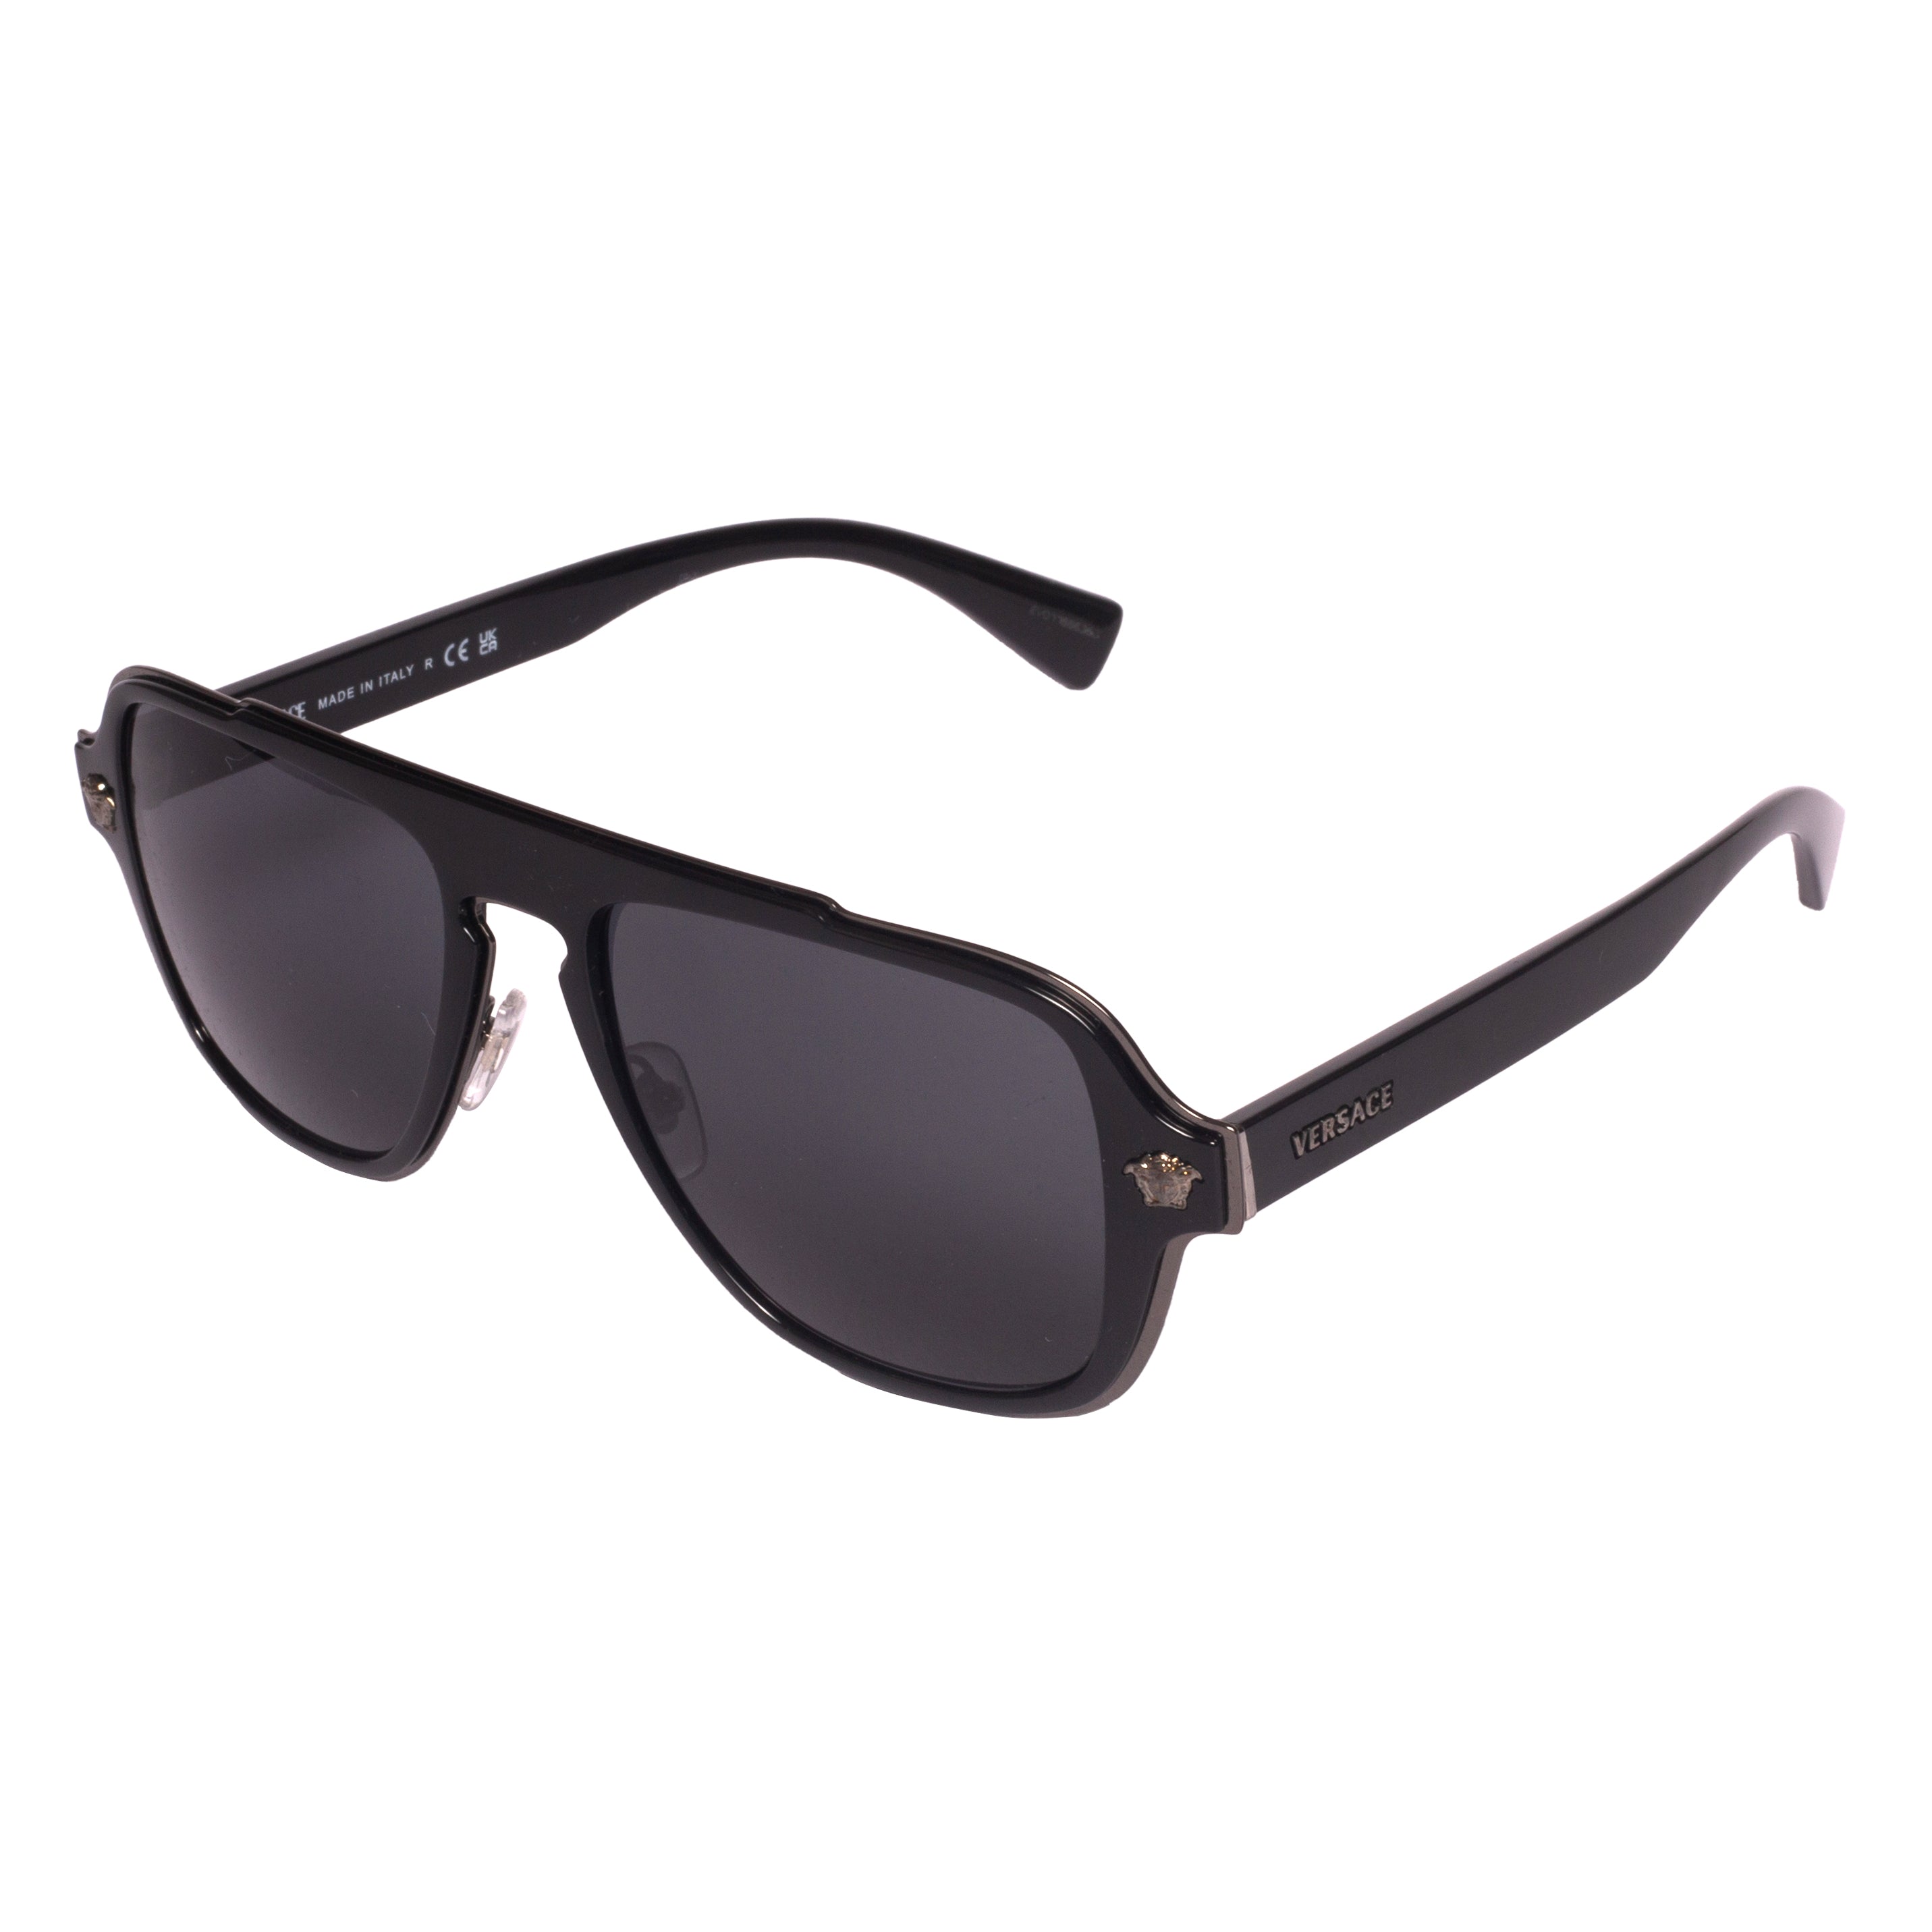 Versace-VE2199-56-100187 Sunglasses - Premium Sunglasses from Versace - Just Rs. 20990! Shop now at Laxmi Opticians